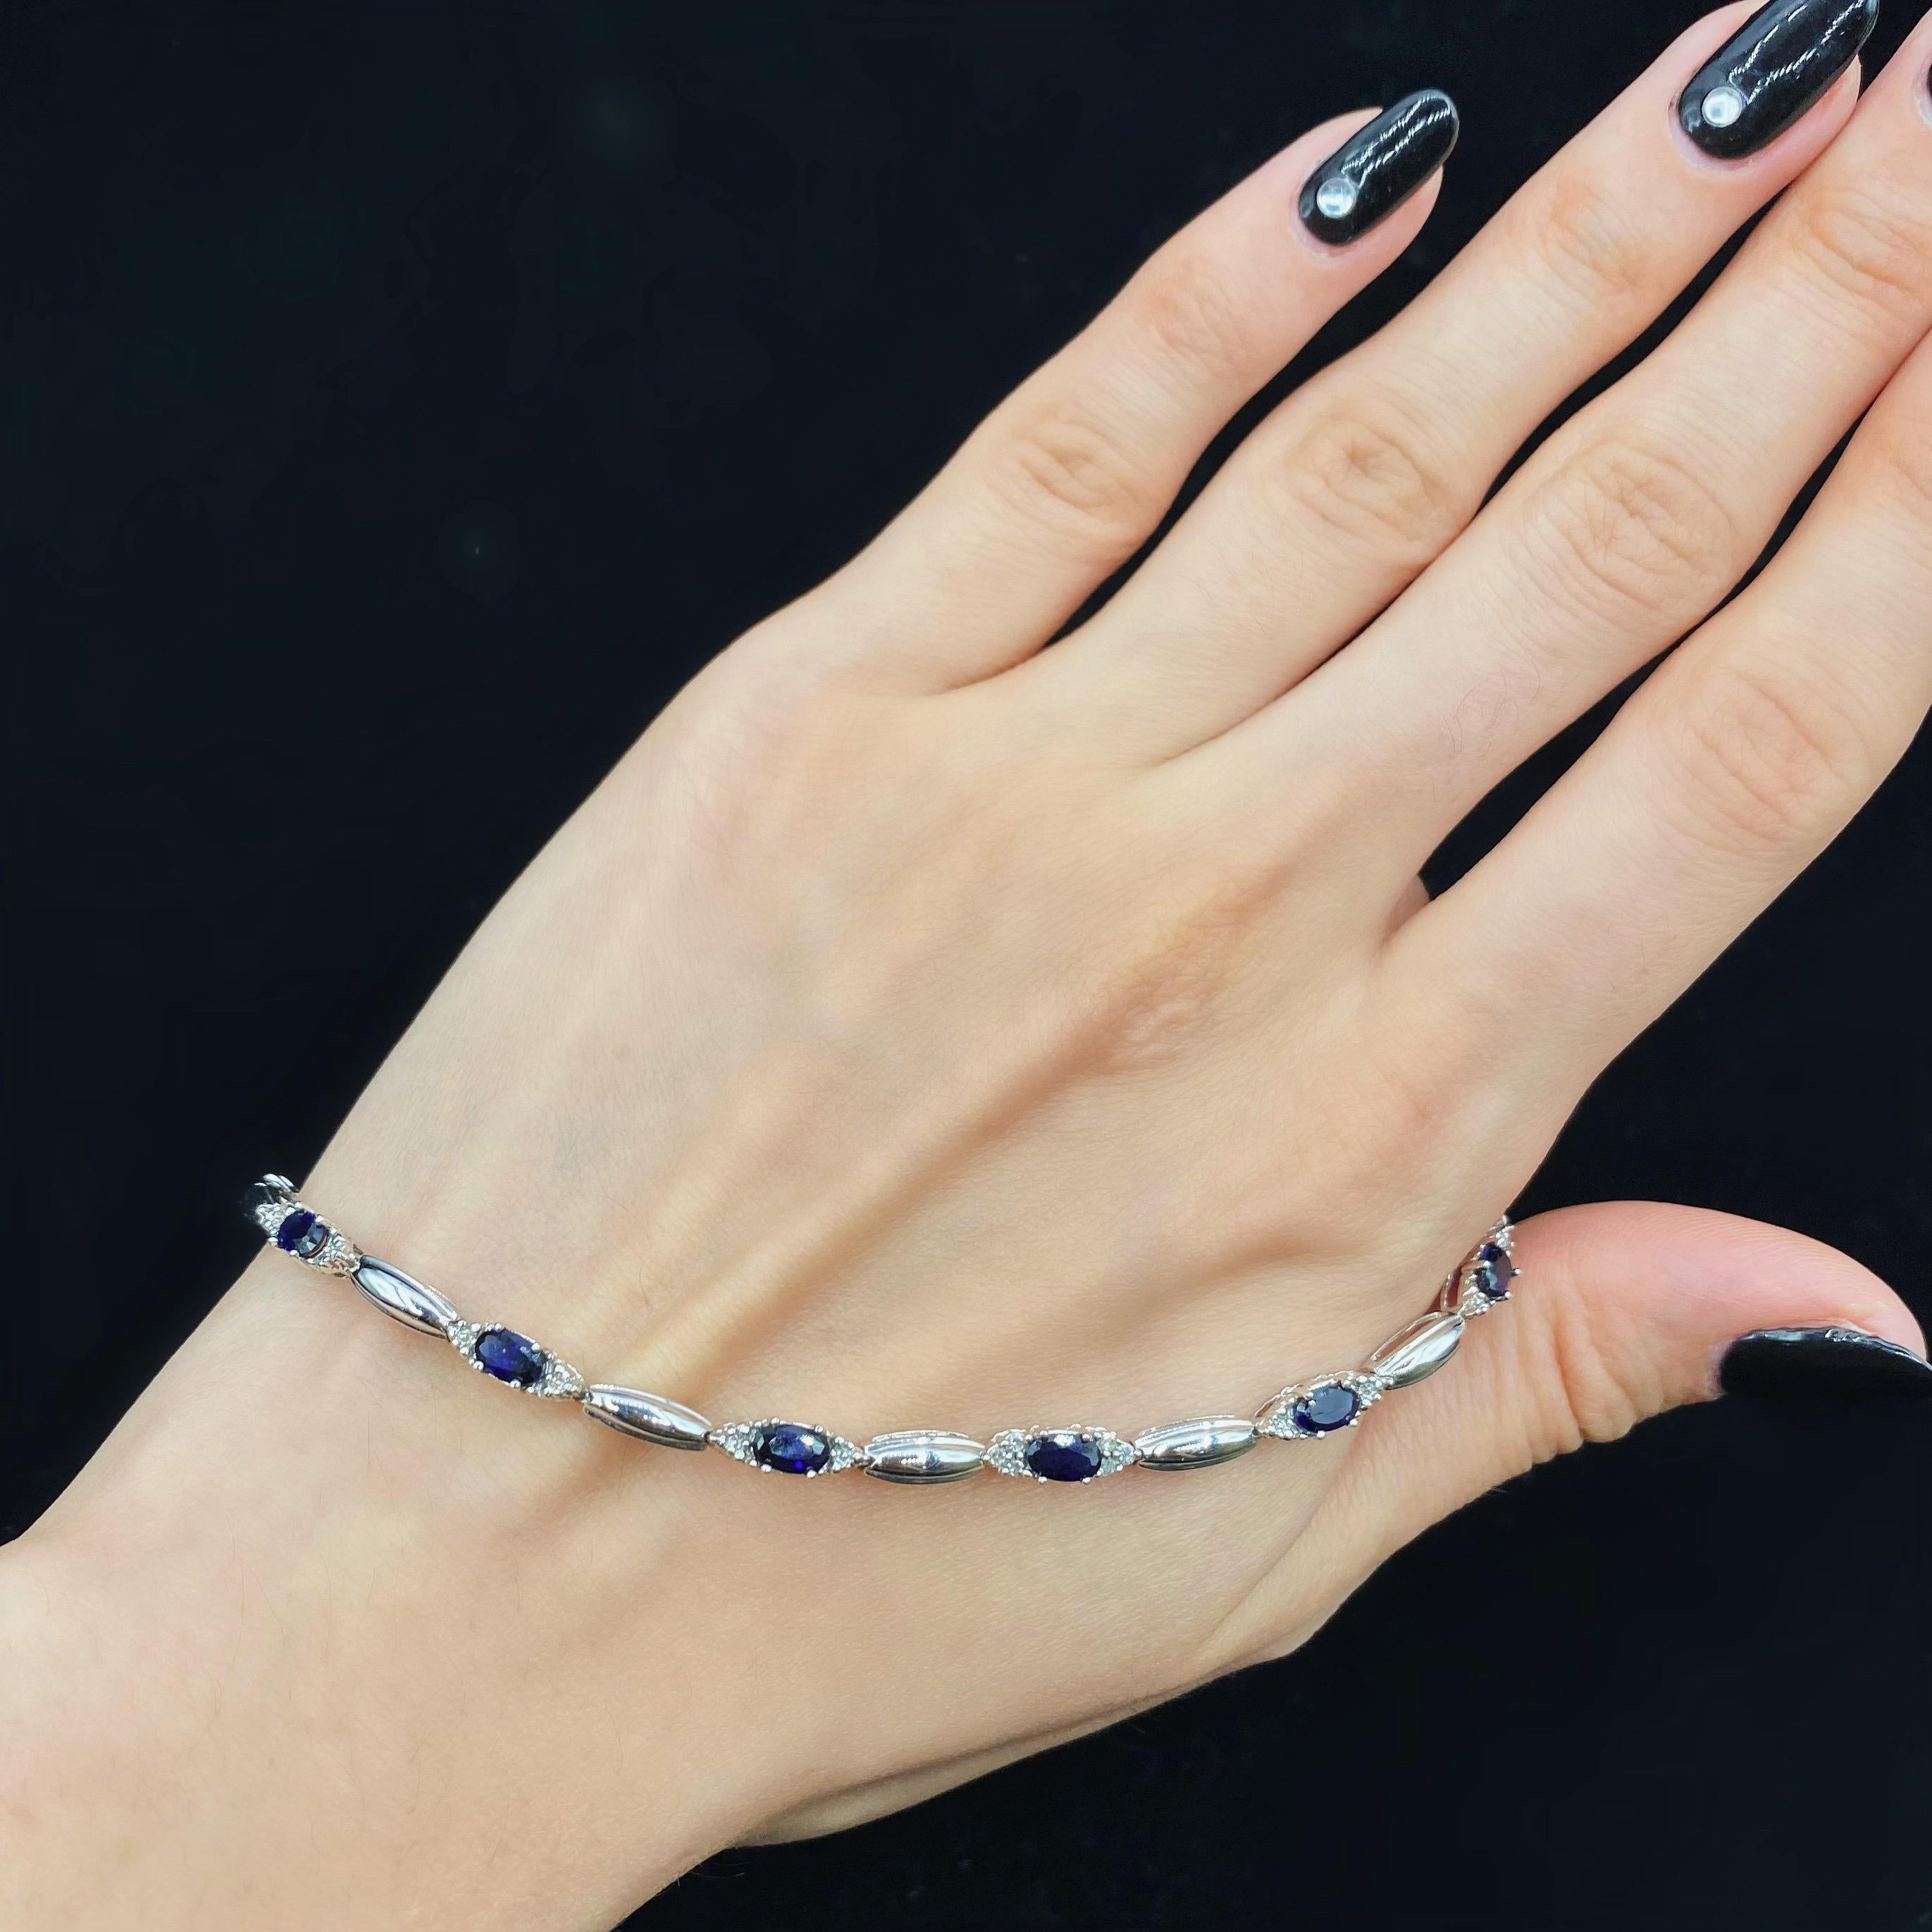 Oval Cut Diamond Bracelet with Blue sapphires For Sale